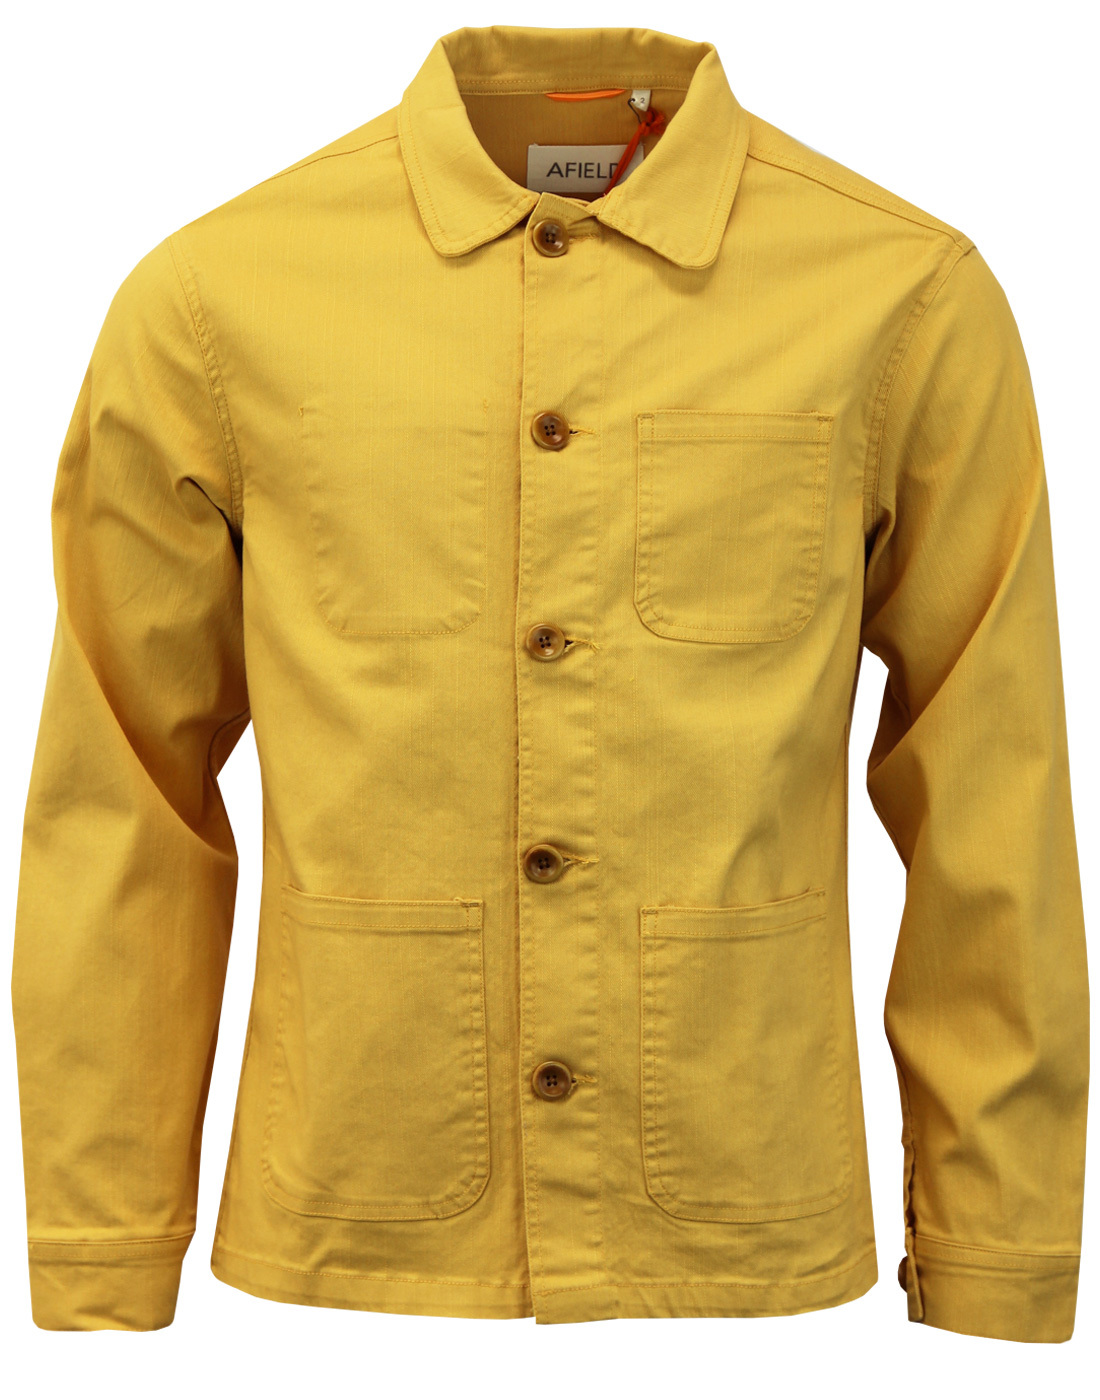 AFIELD Retro Sixties Cotton Twill Station Jacket